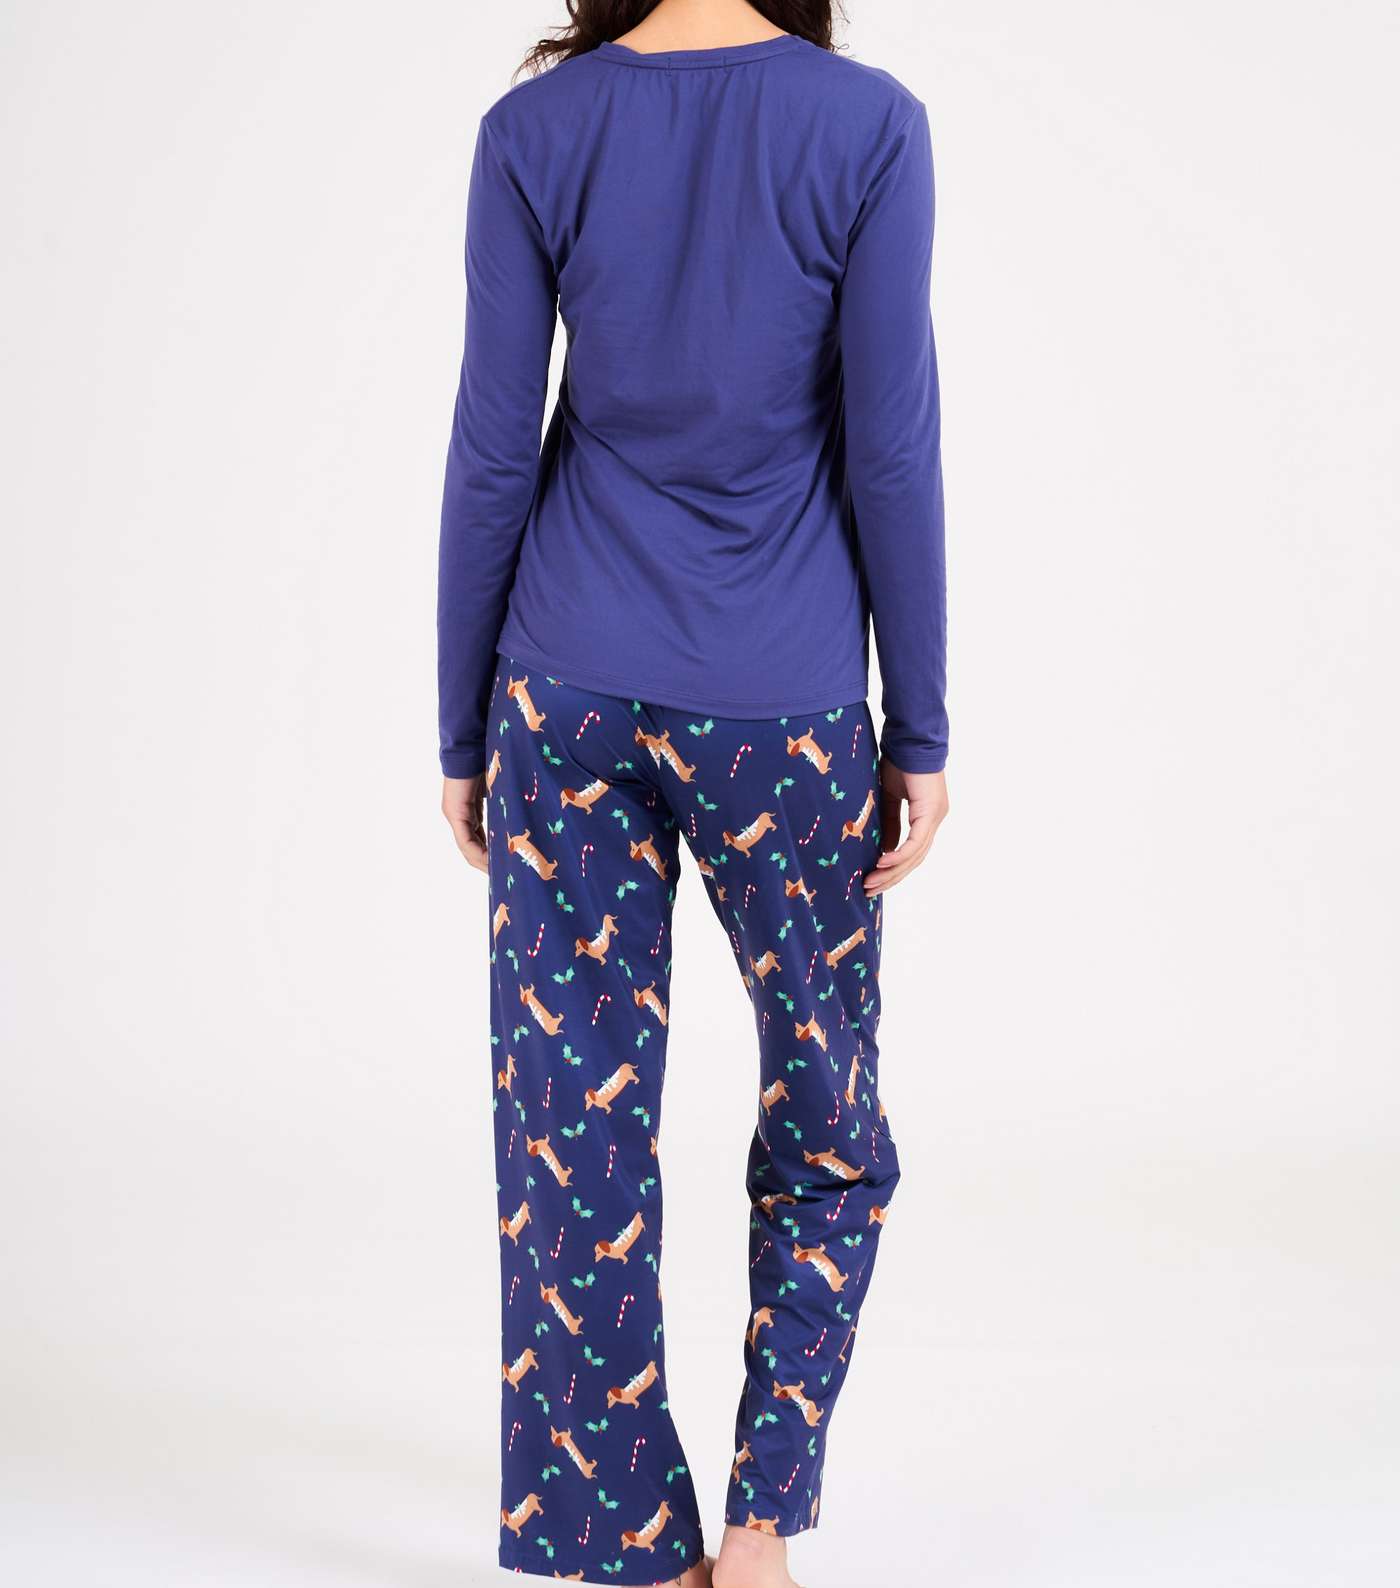 Loungeable Blue Trouser Pyjama Set with Sausage Dog Print Image 5